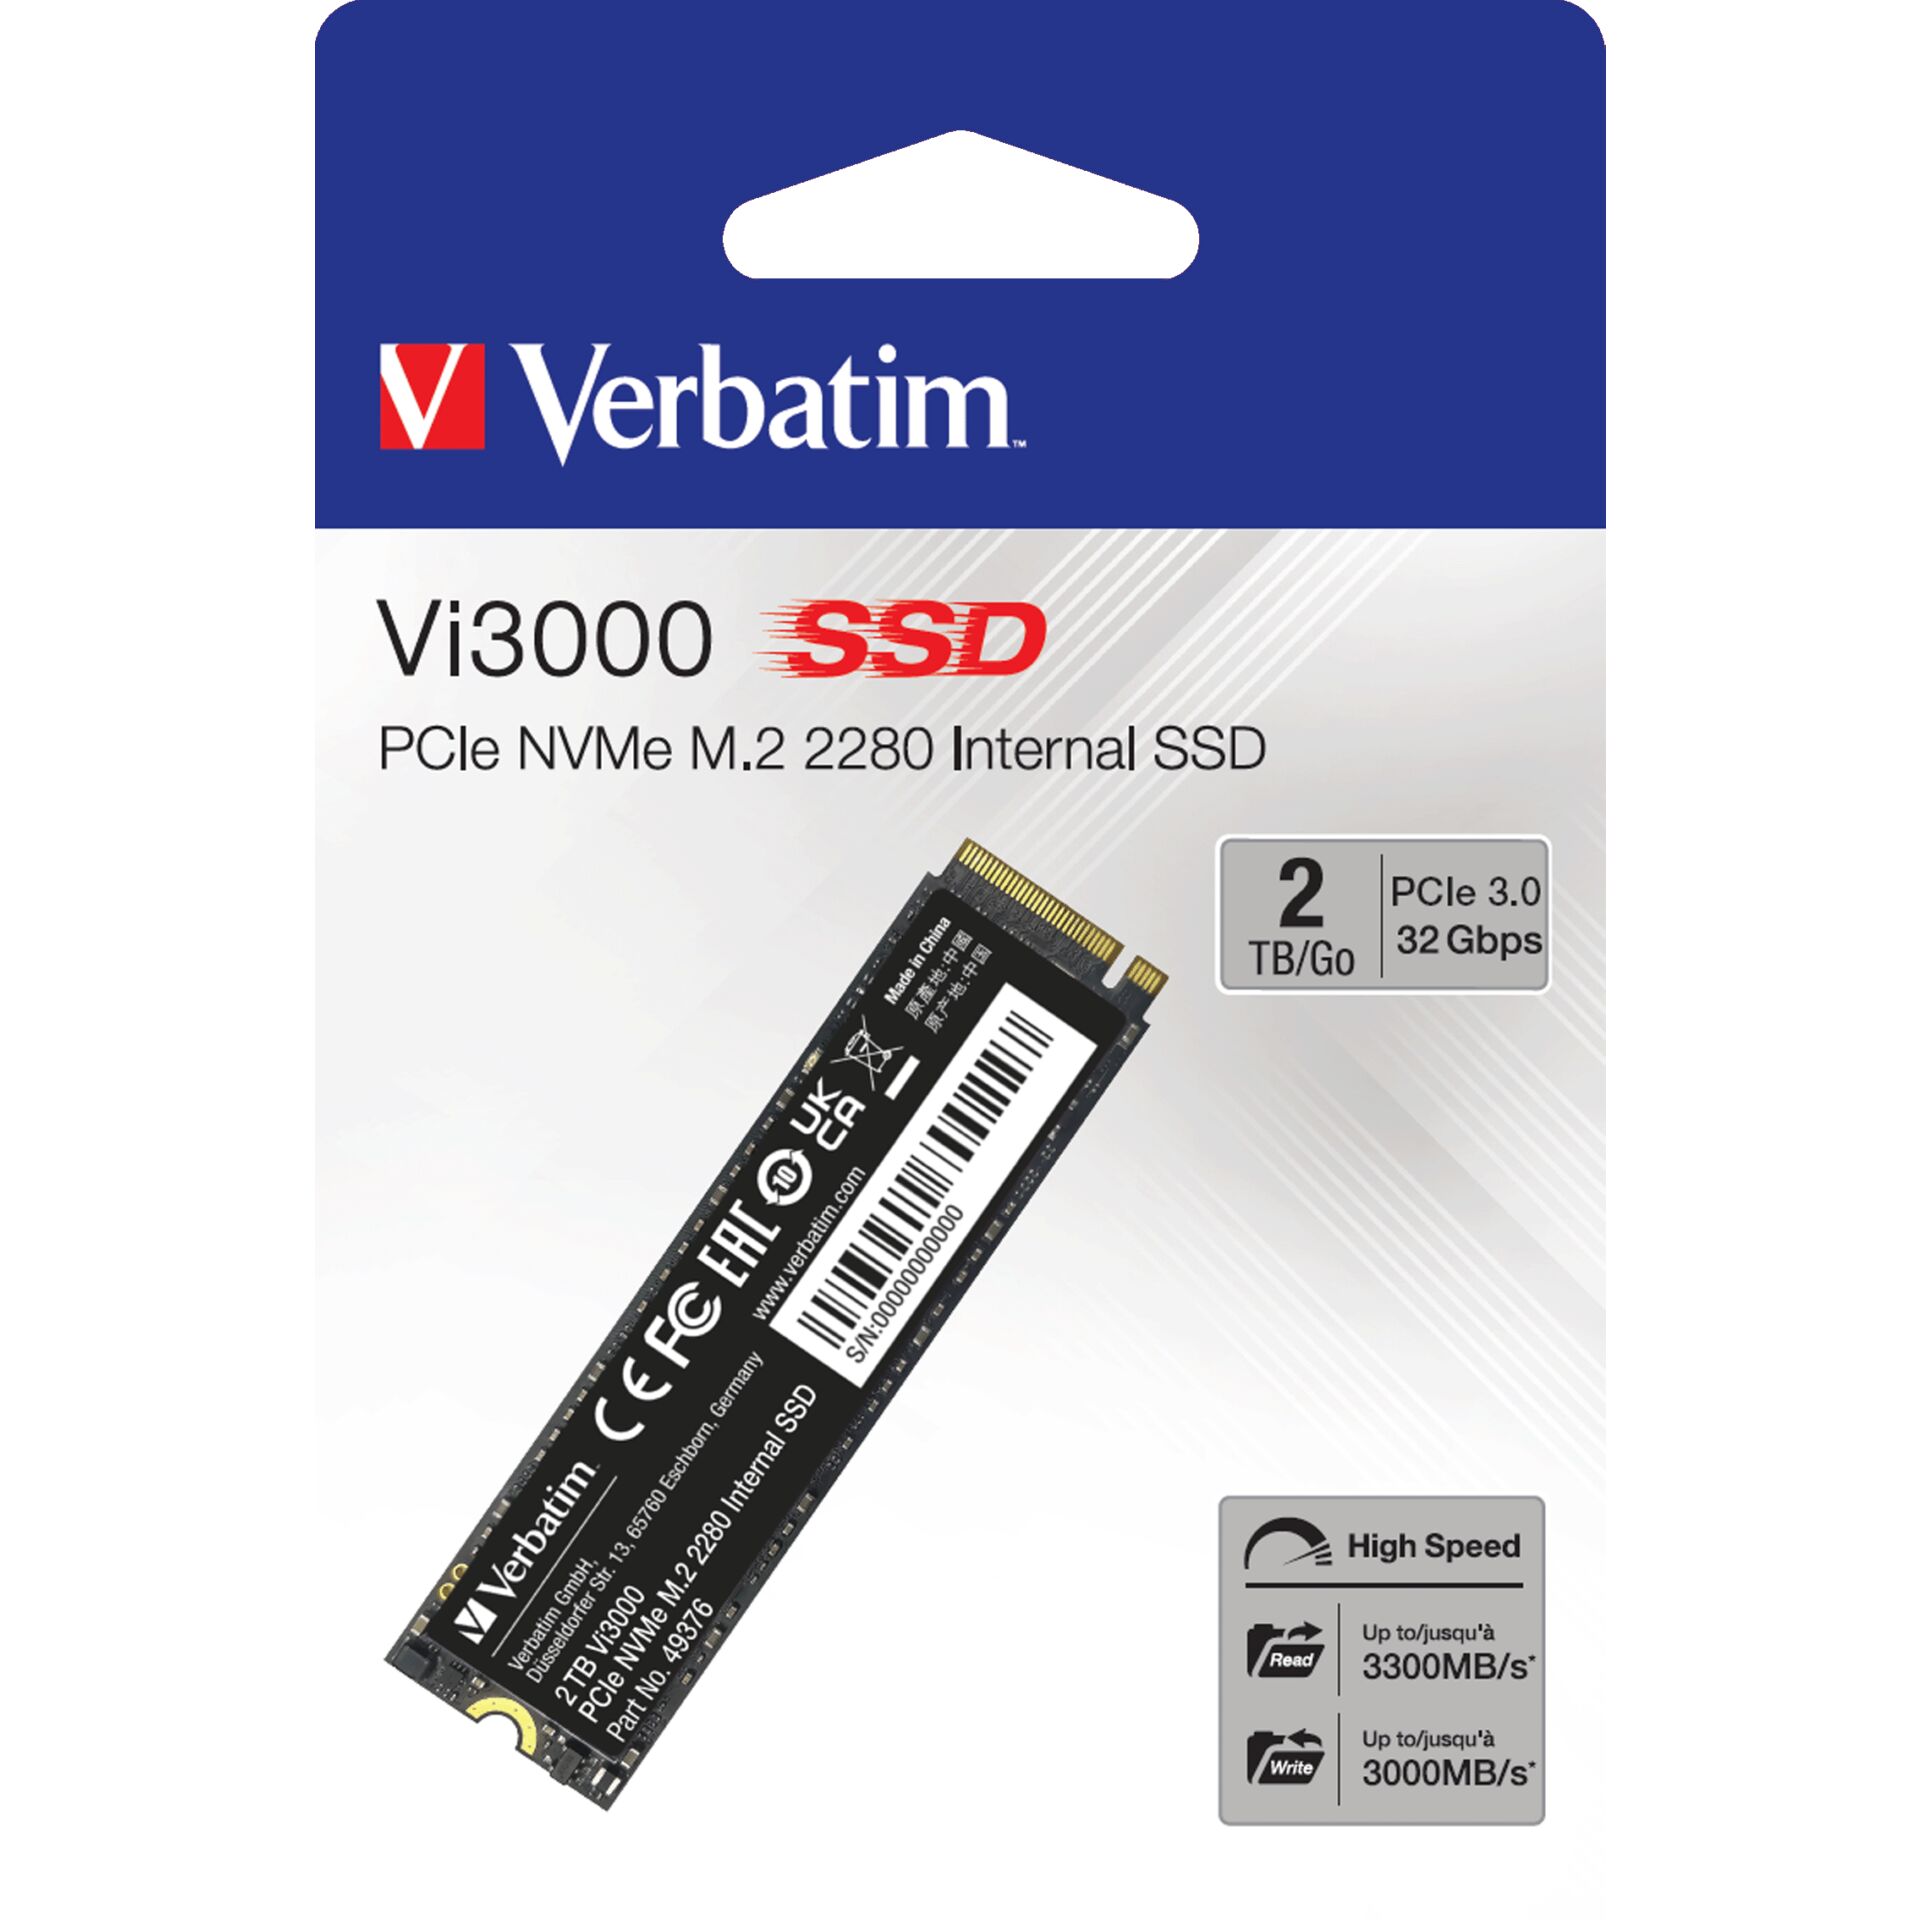 Verbatim Vi3000 PCle NVMe M.2 SSD 2TB                    493